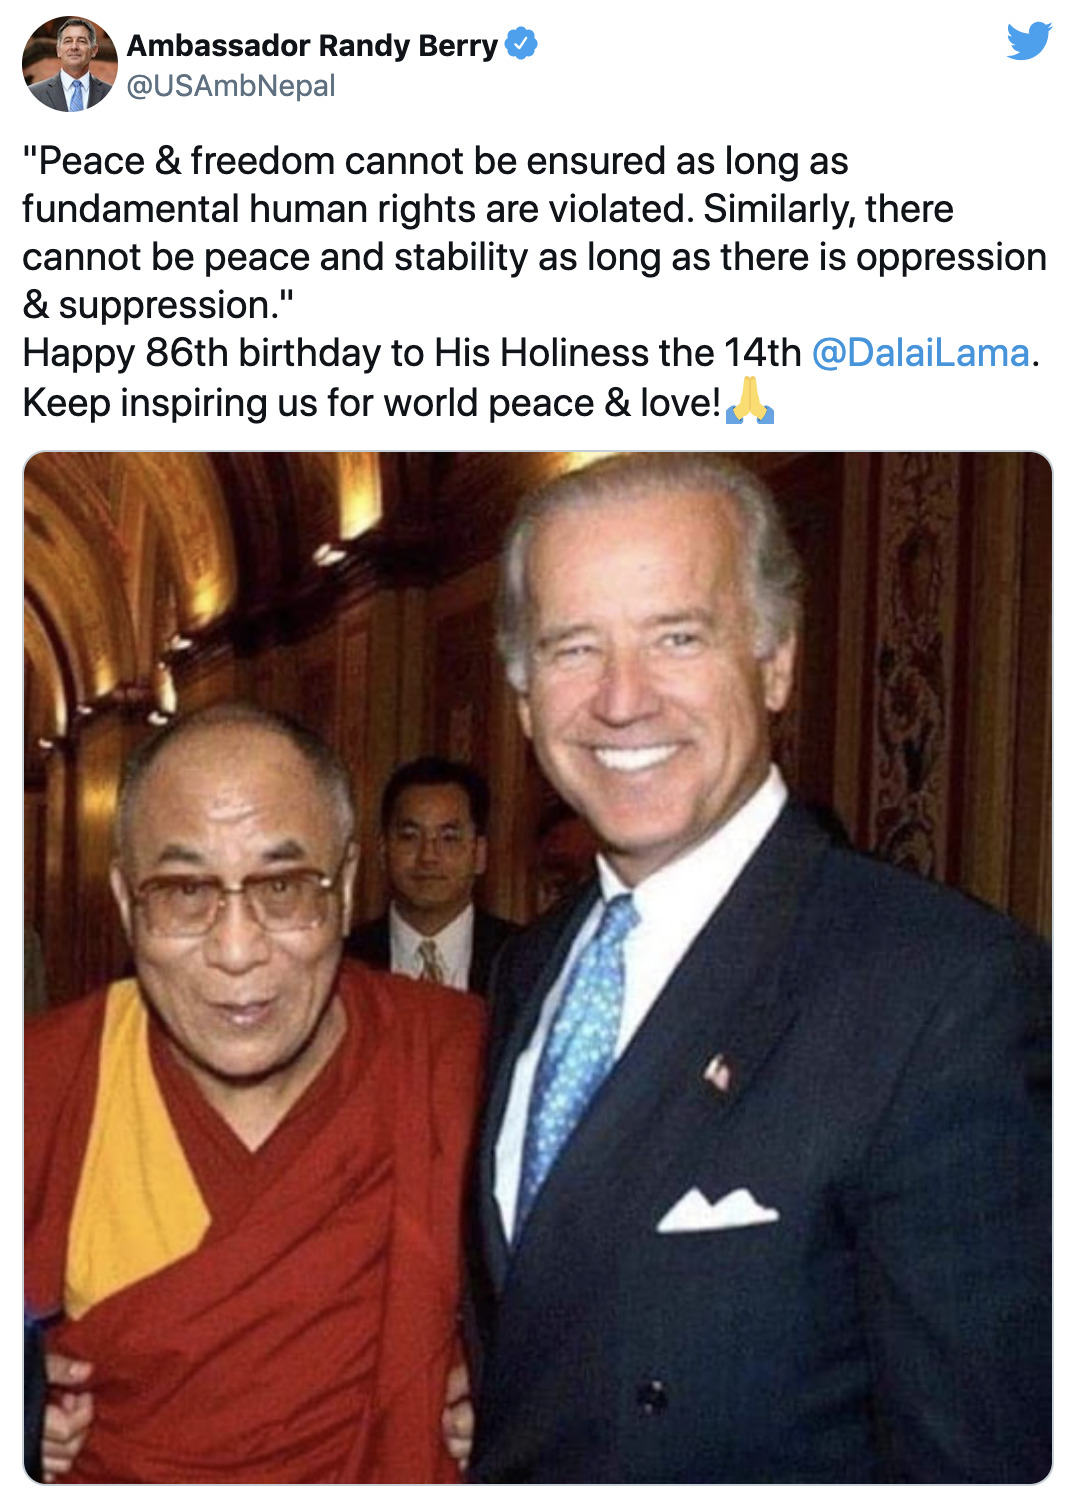  US Ambassador to Nepal Randy Berry greets His Holiness the 14th Dalai Lama on his 86th birthday. 